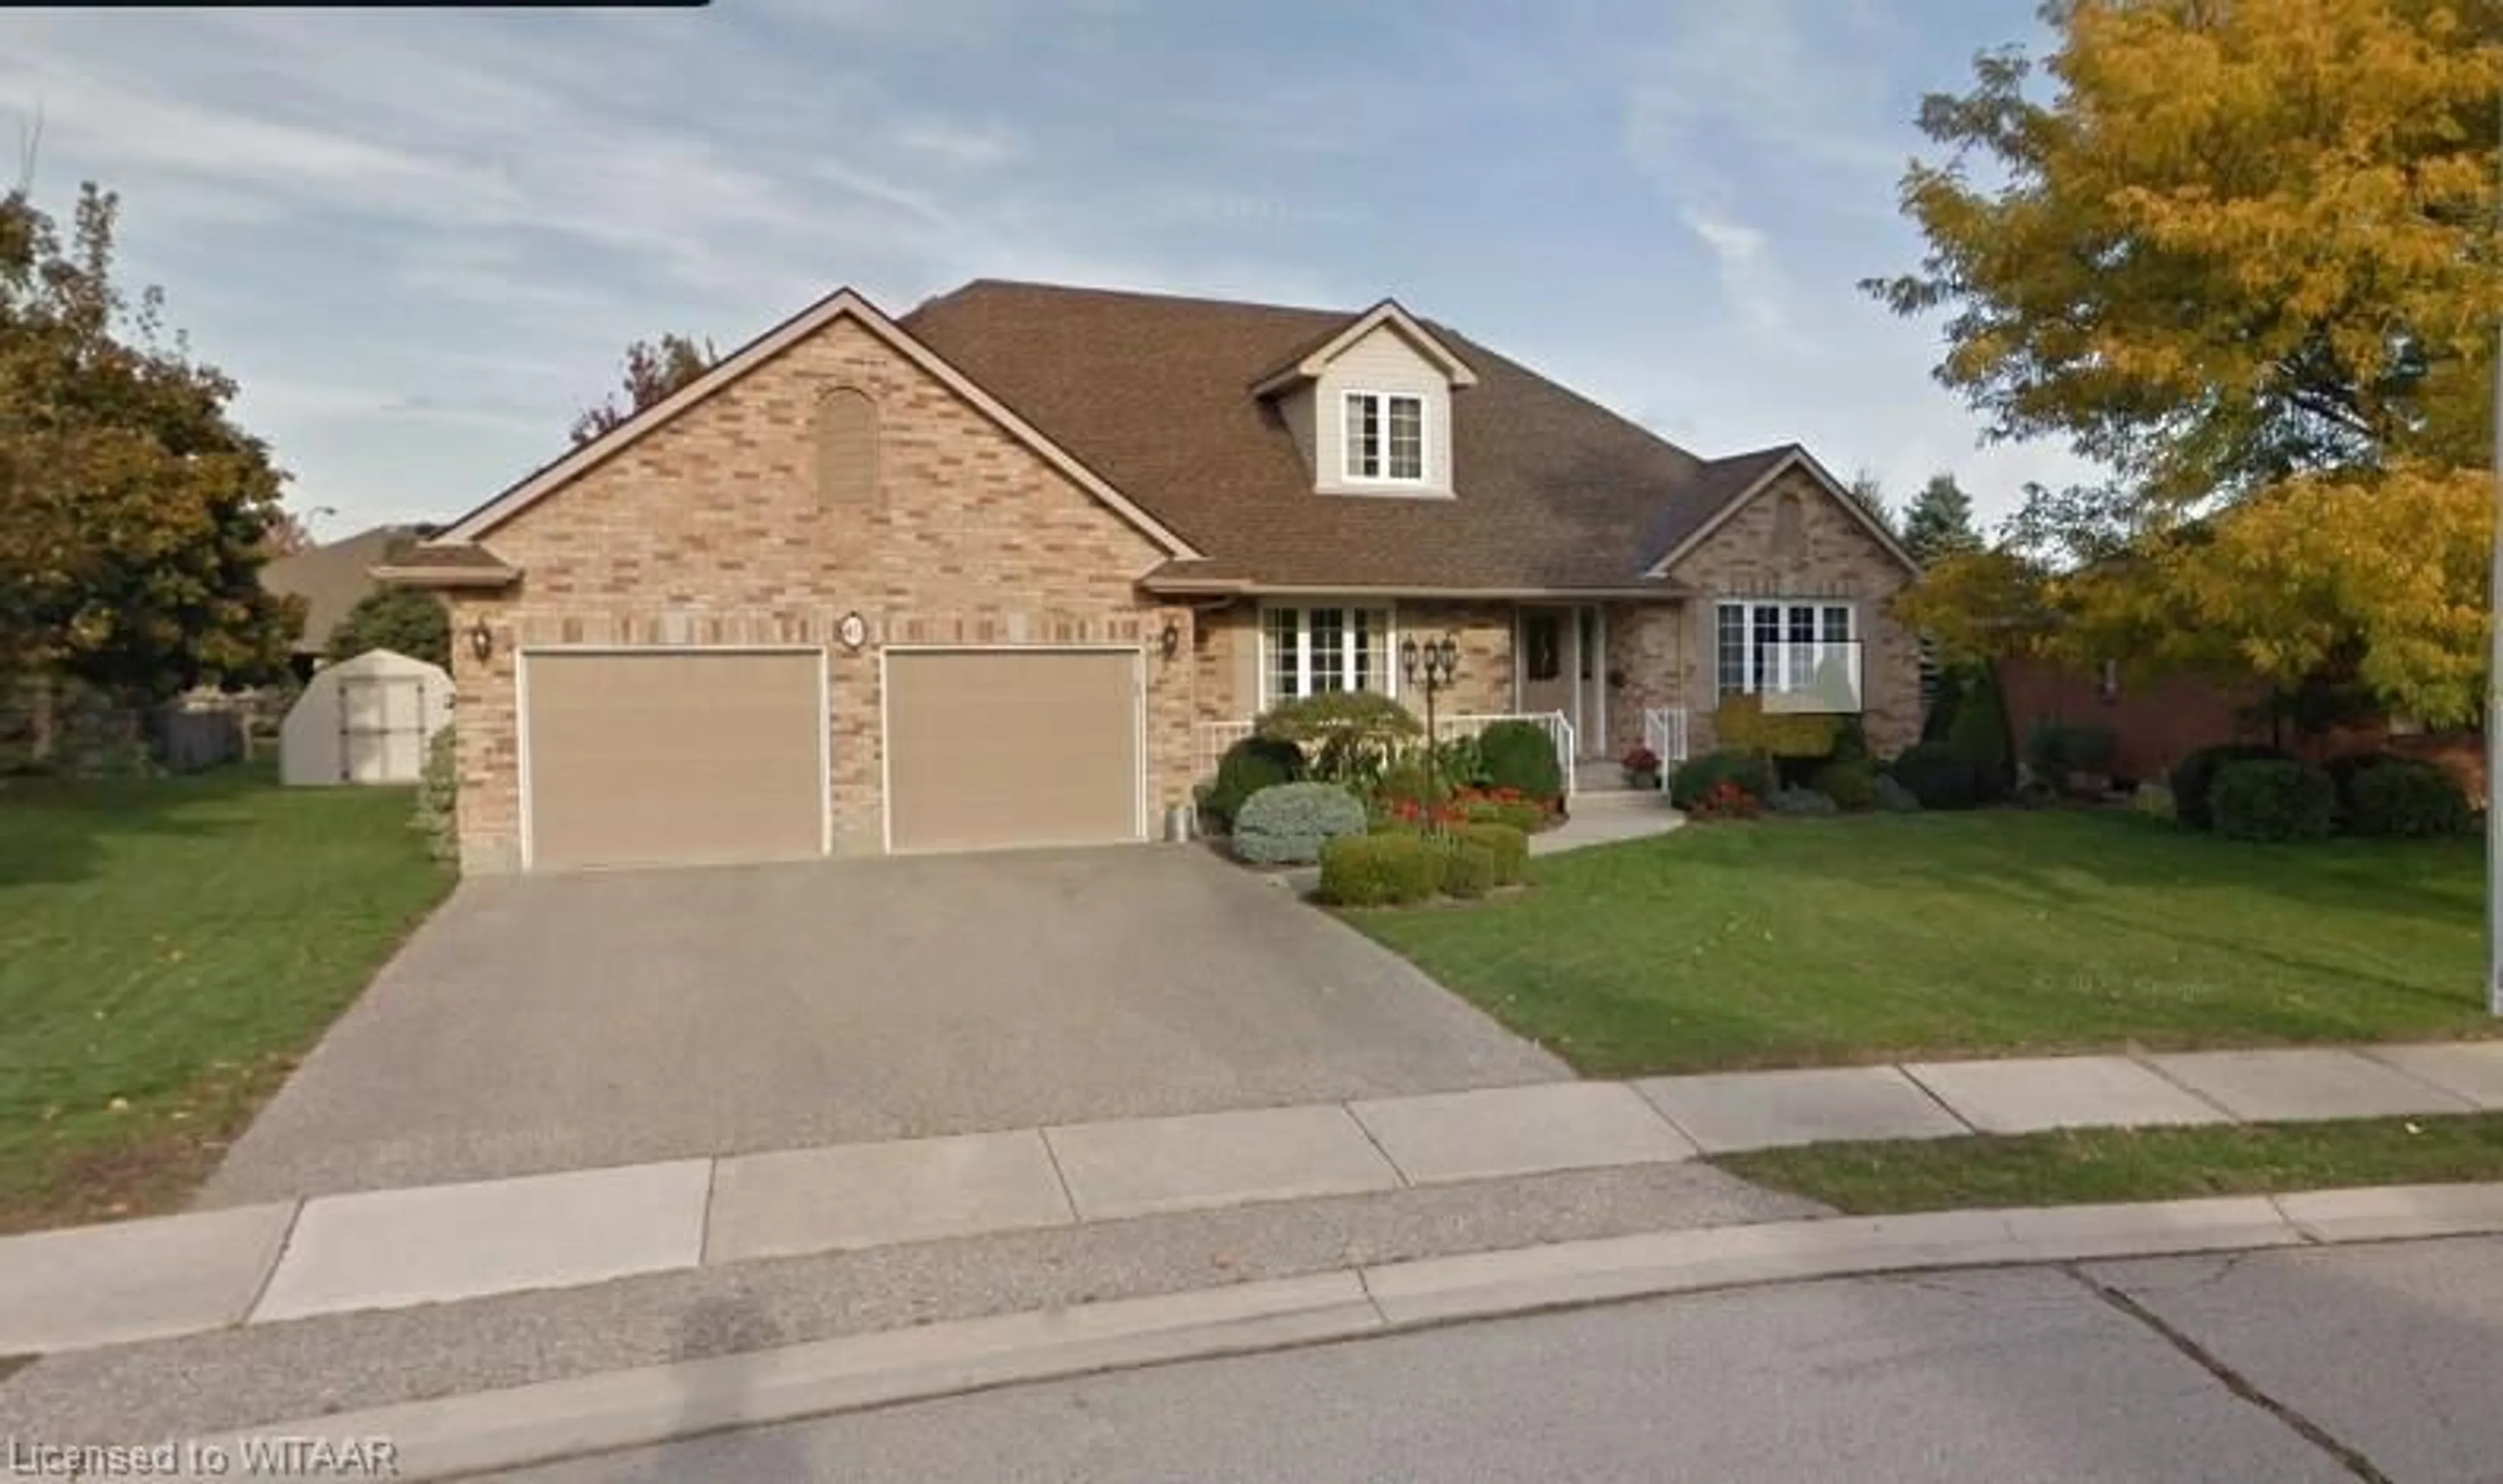 Home with brick exterior material for 40 Alexander Ave, Tillsonburg Ontario N4G 4Z1